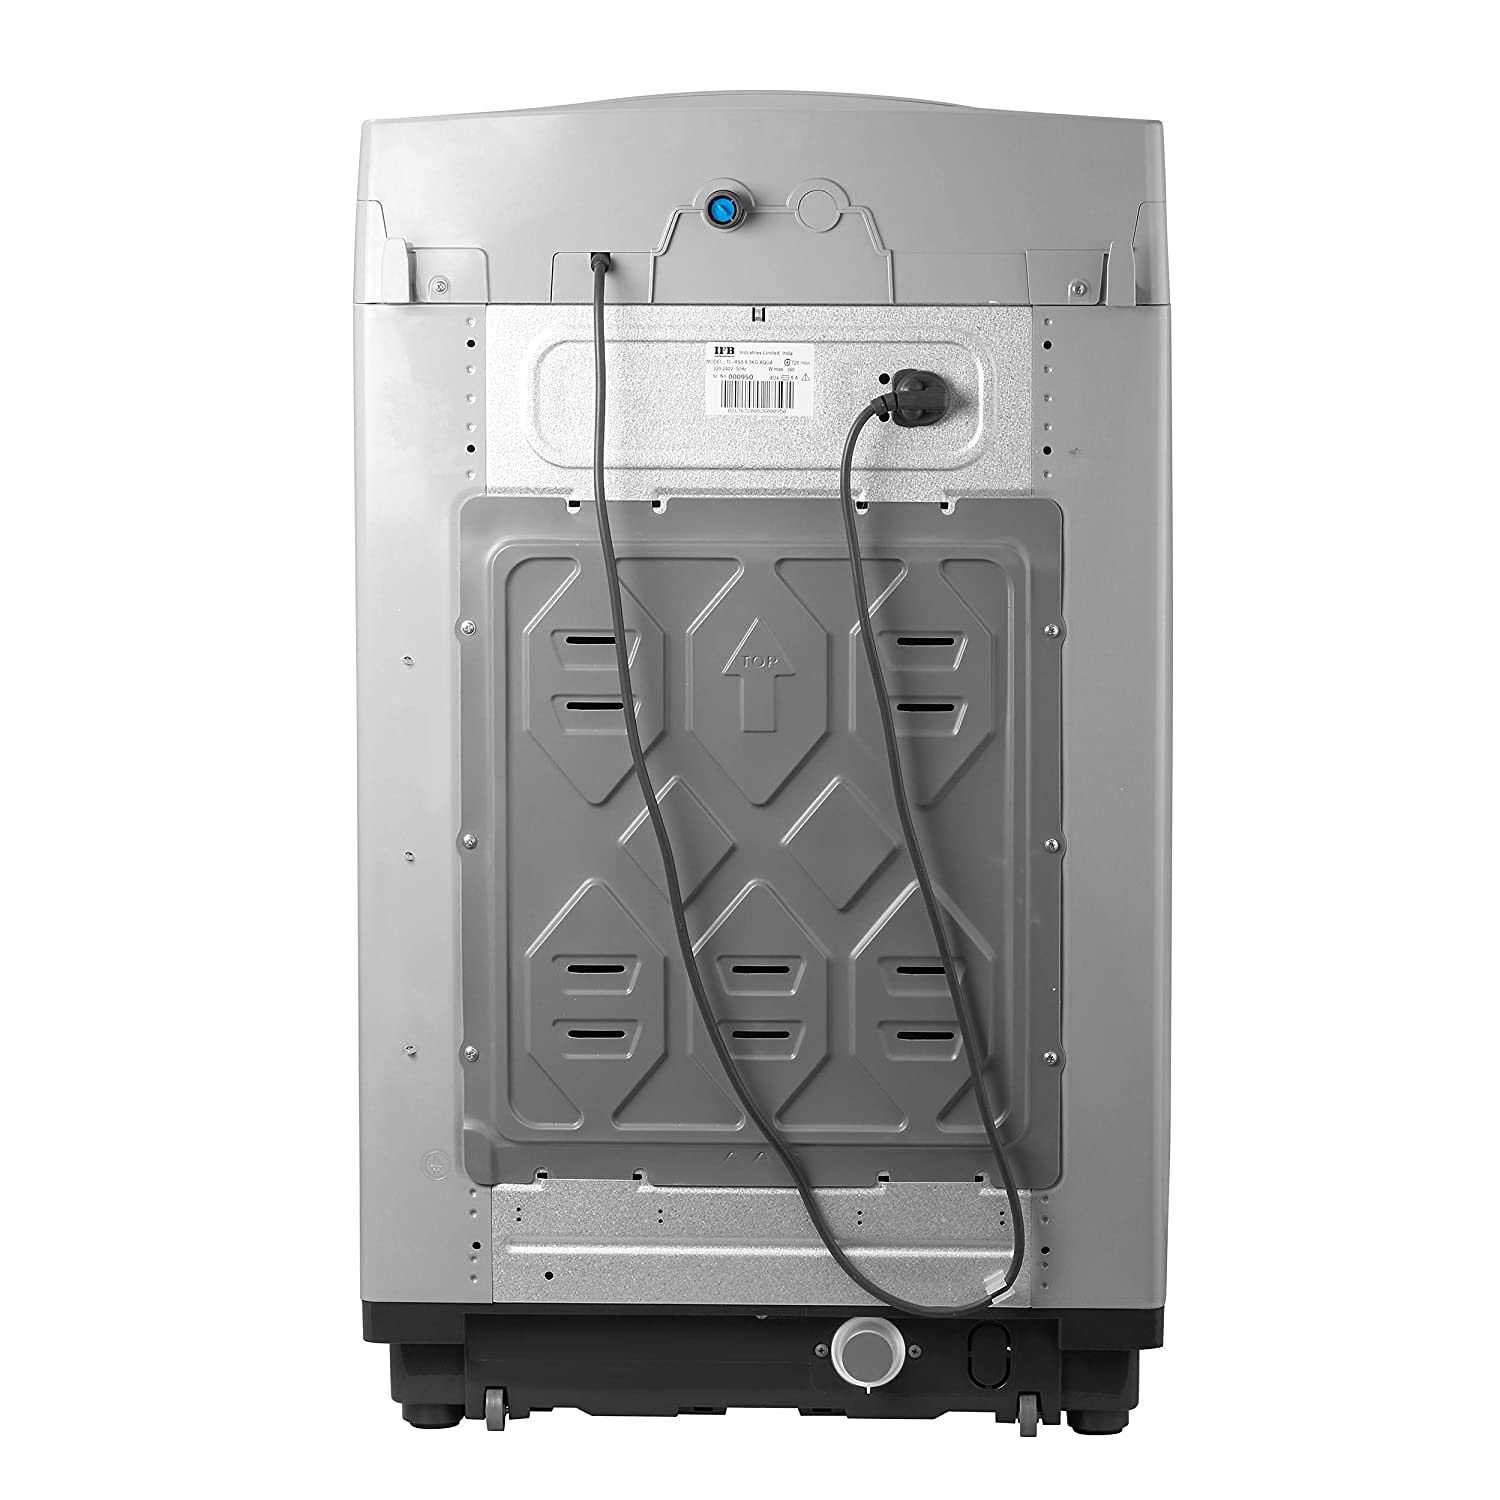 IFB 6.5 Kg 5 Star Fully-Automatic Top Loading Washing Machine (TL RSS Aqua, Light Grey, 3D Wash technology)